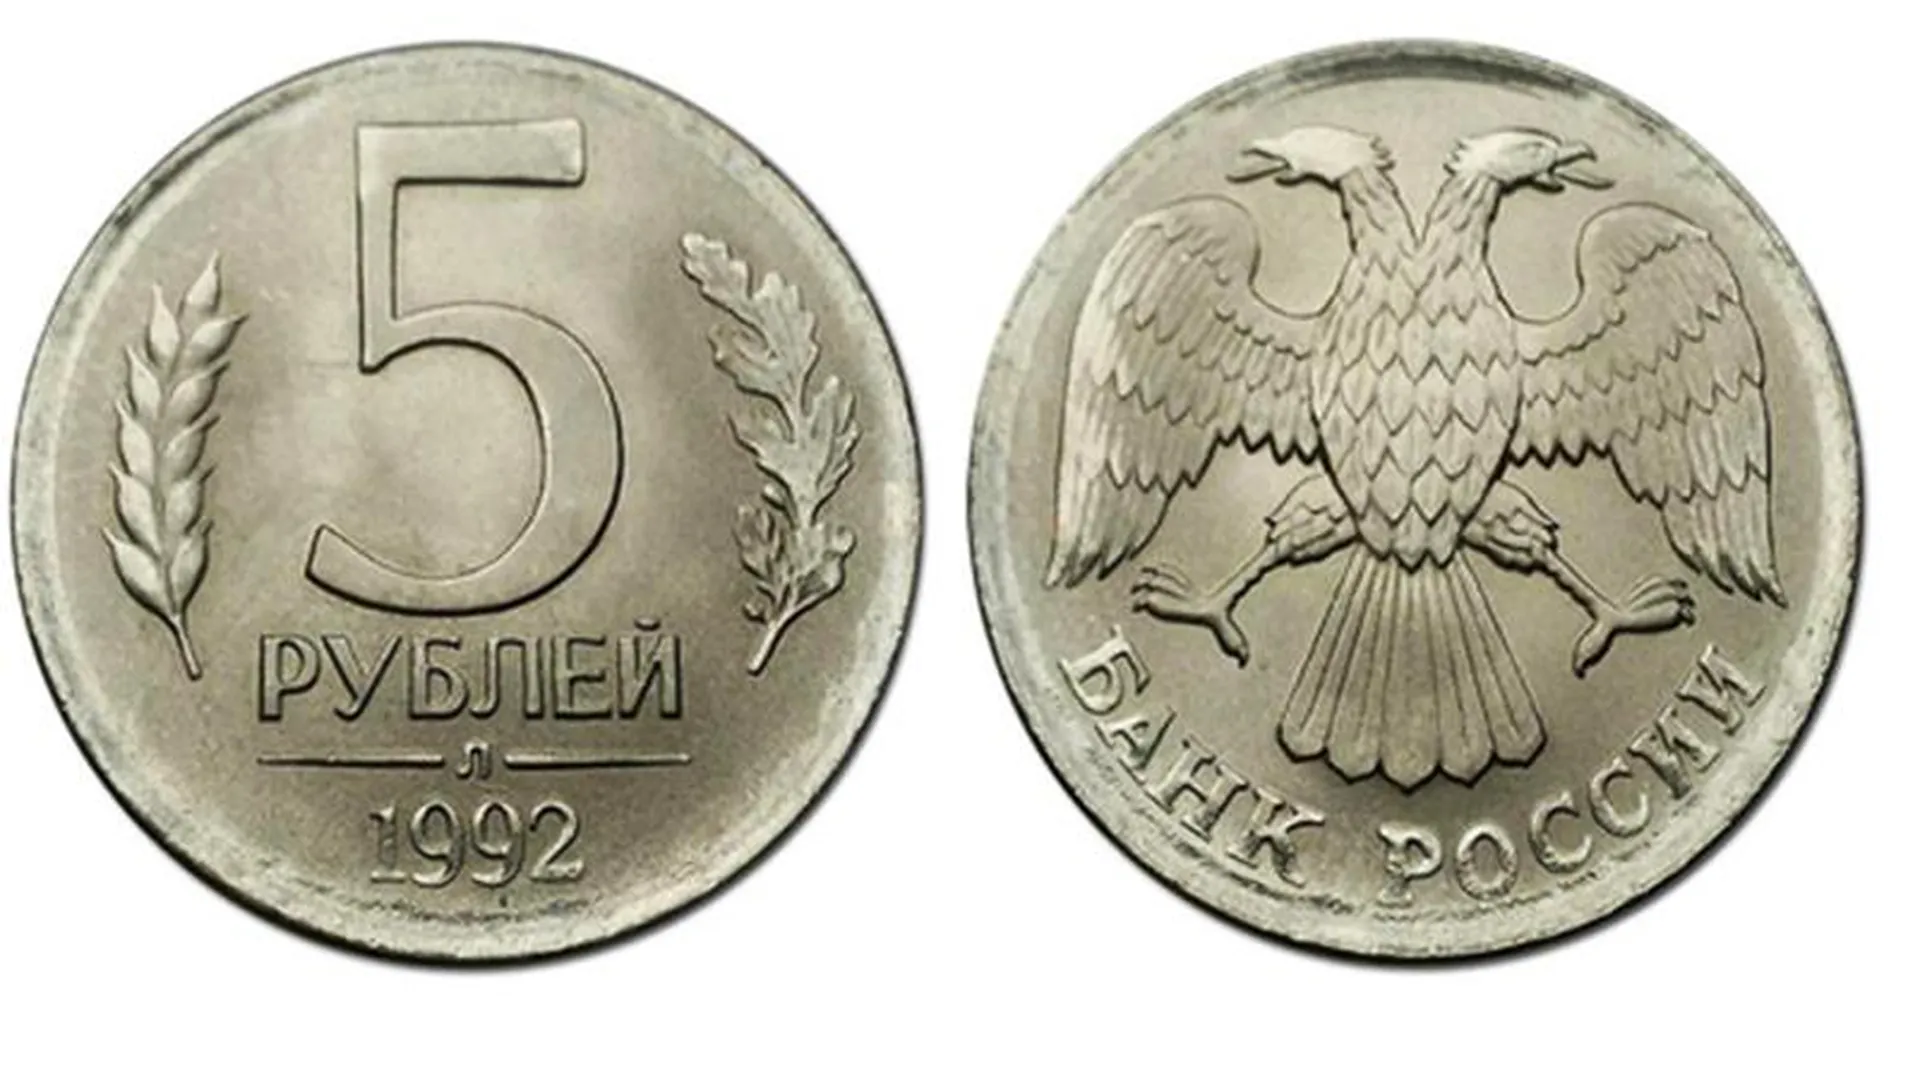 moneta-russia.ru